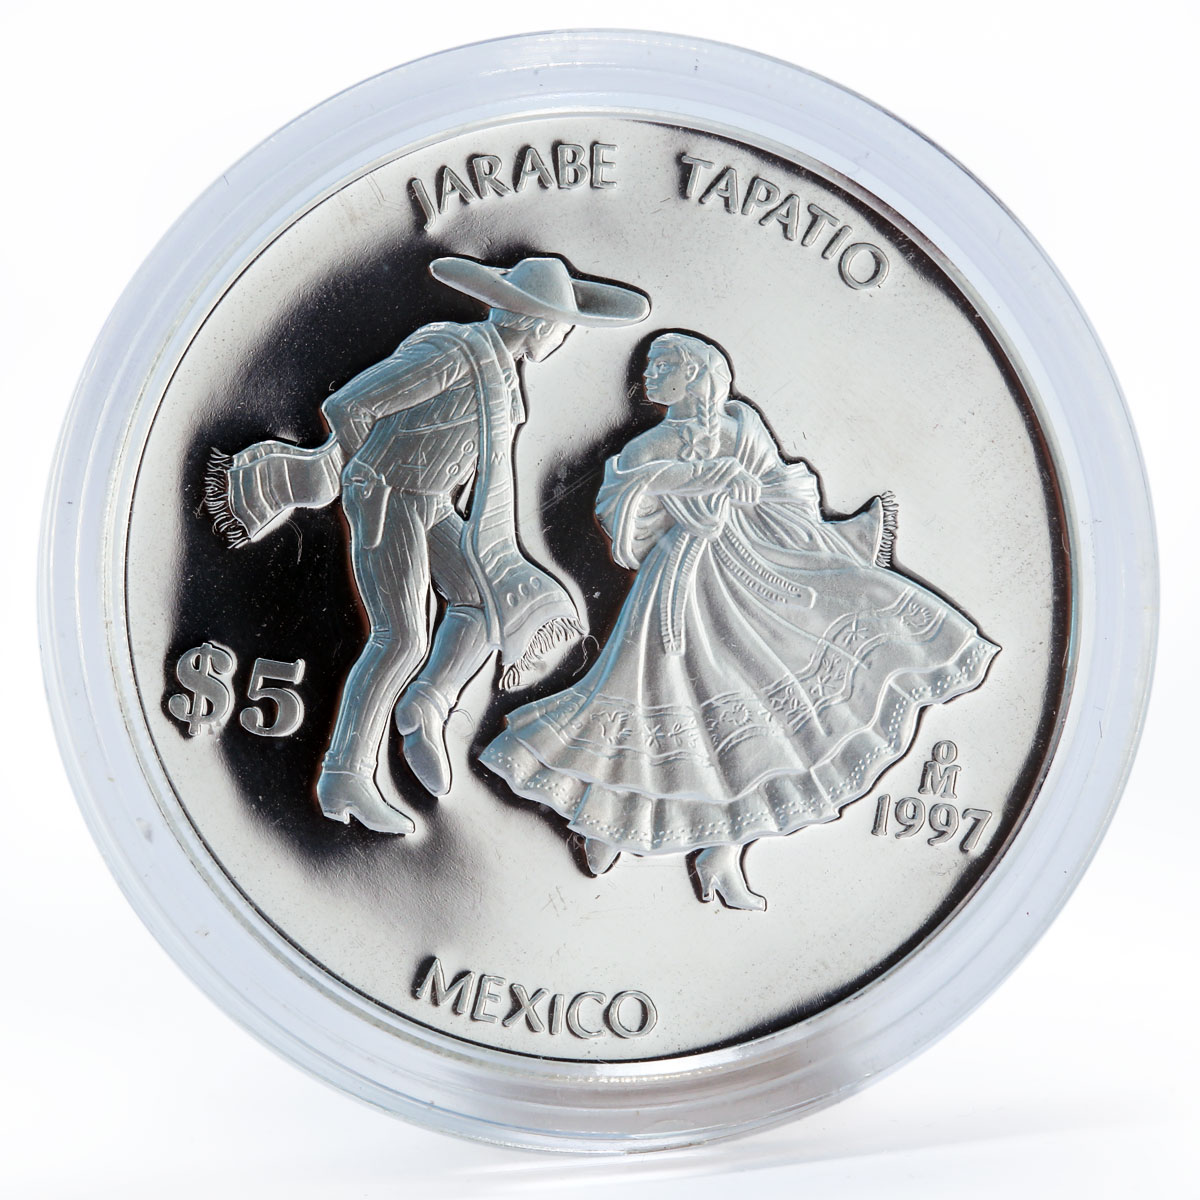 Mexico 5 Pesos Jarabe tapatio proof silver coin 1997